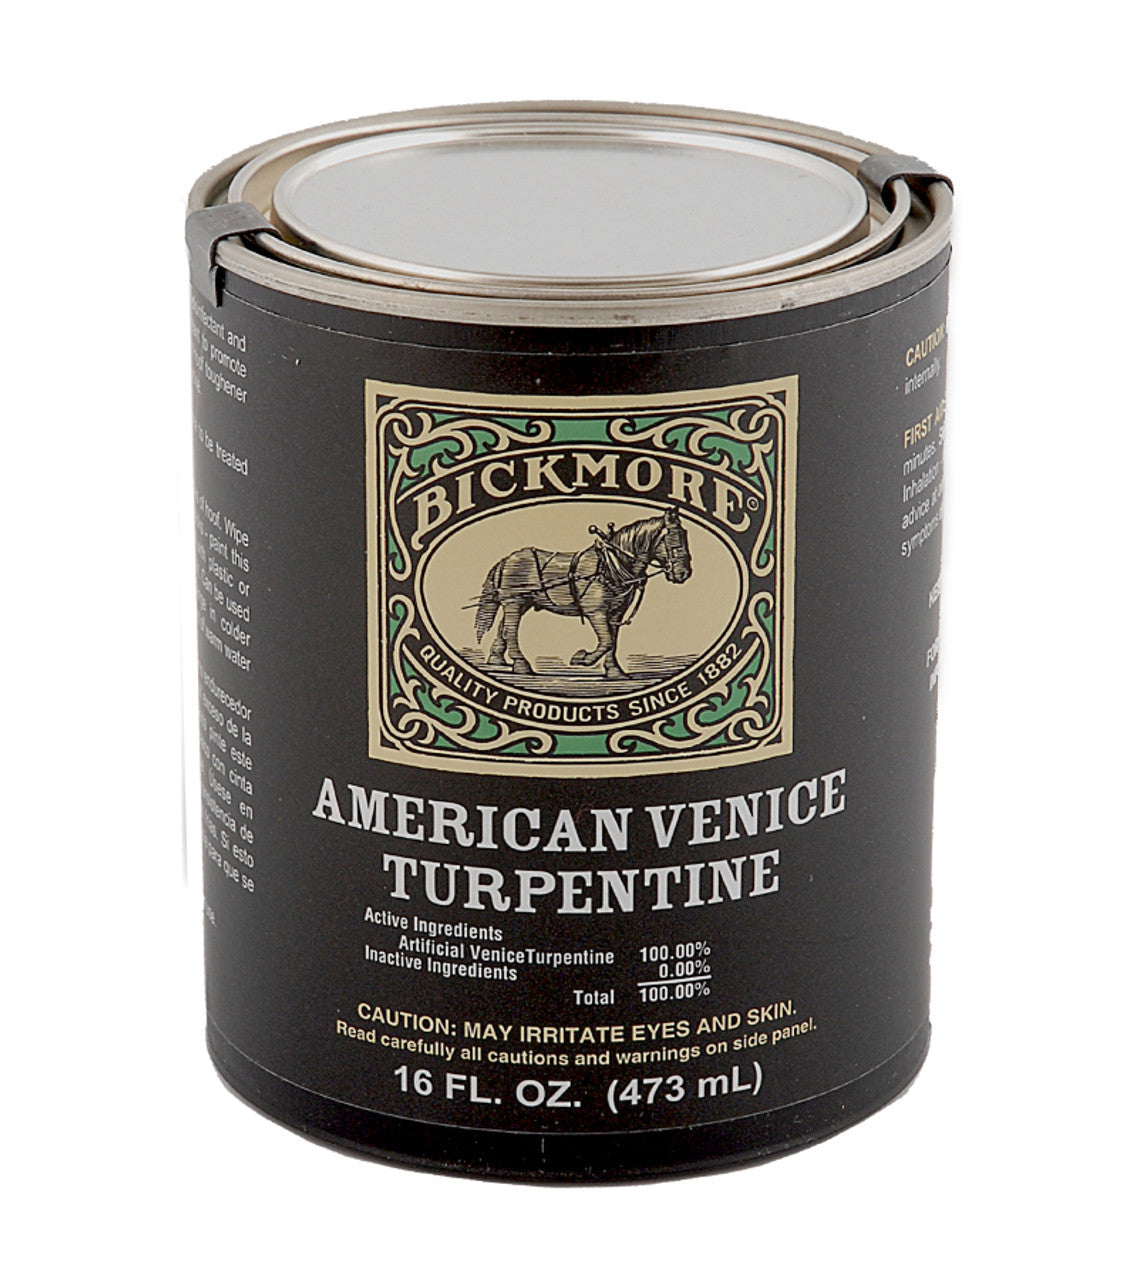 Bickmore® American Venice Turpentine 16 oz.-TexanSaddles.com